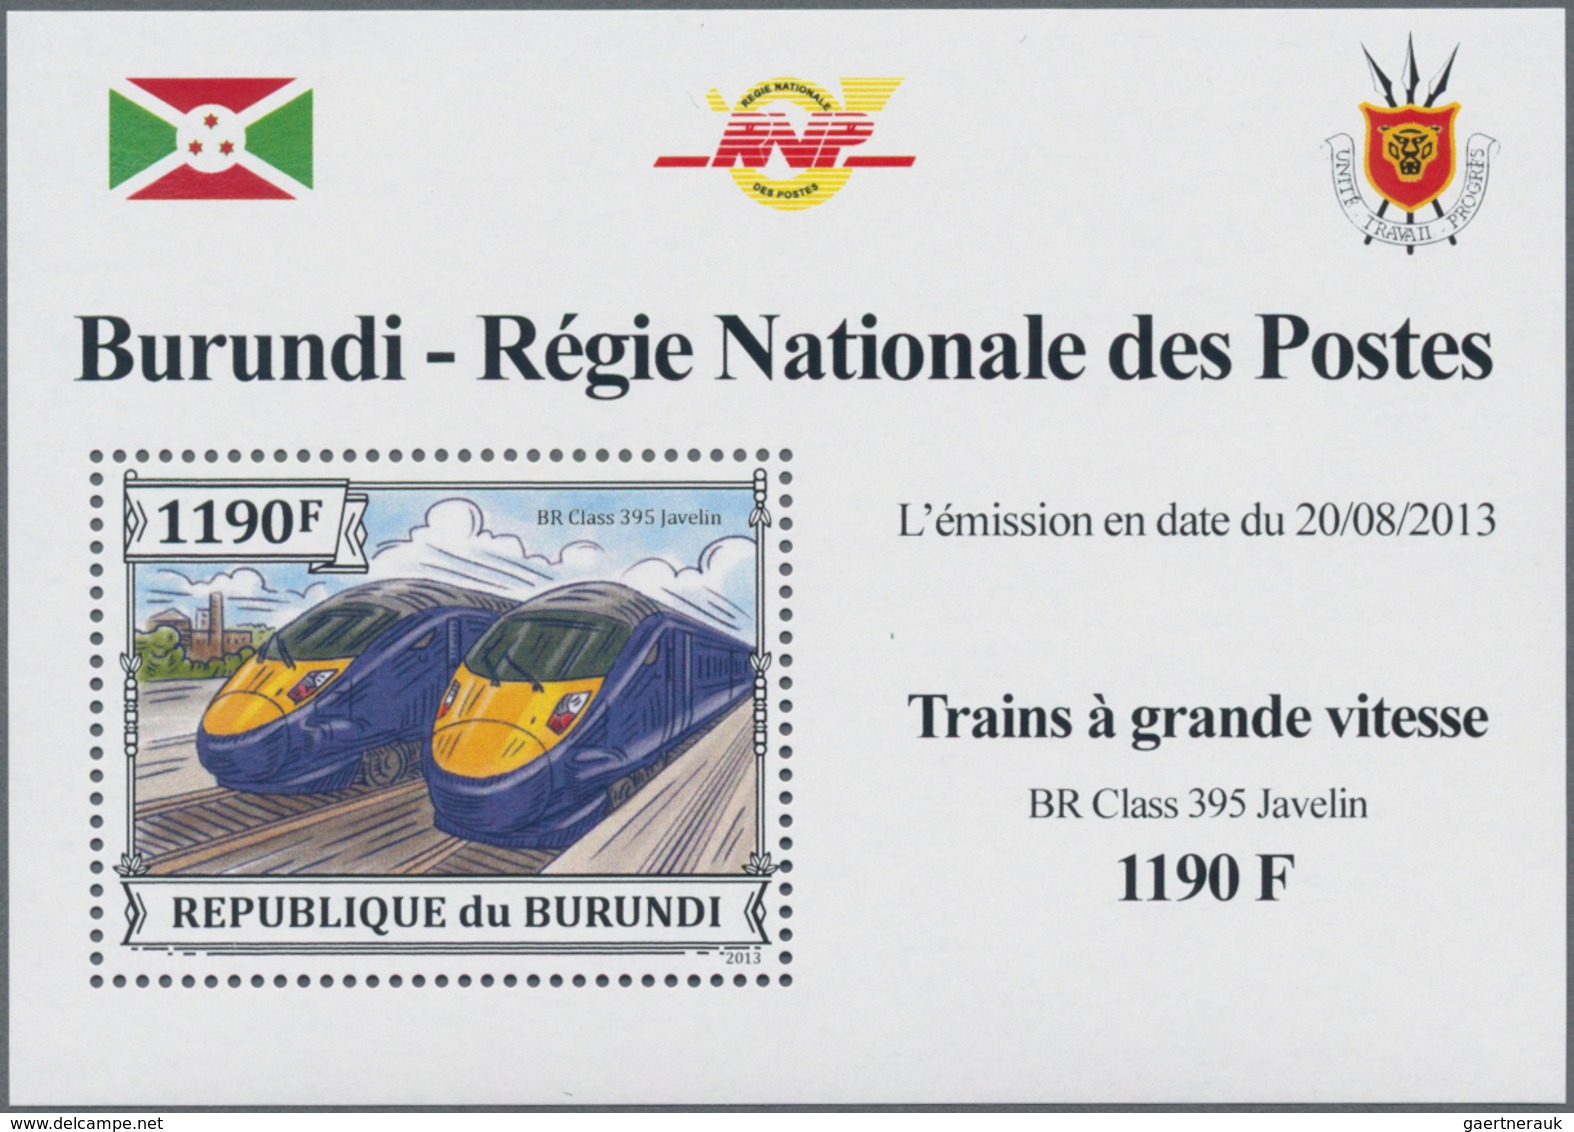 Thematische Philatelie: 2011/2013, Burundi. A big lot of different topics in complete souvenir sheet